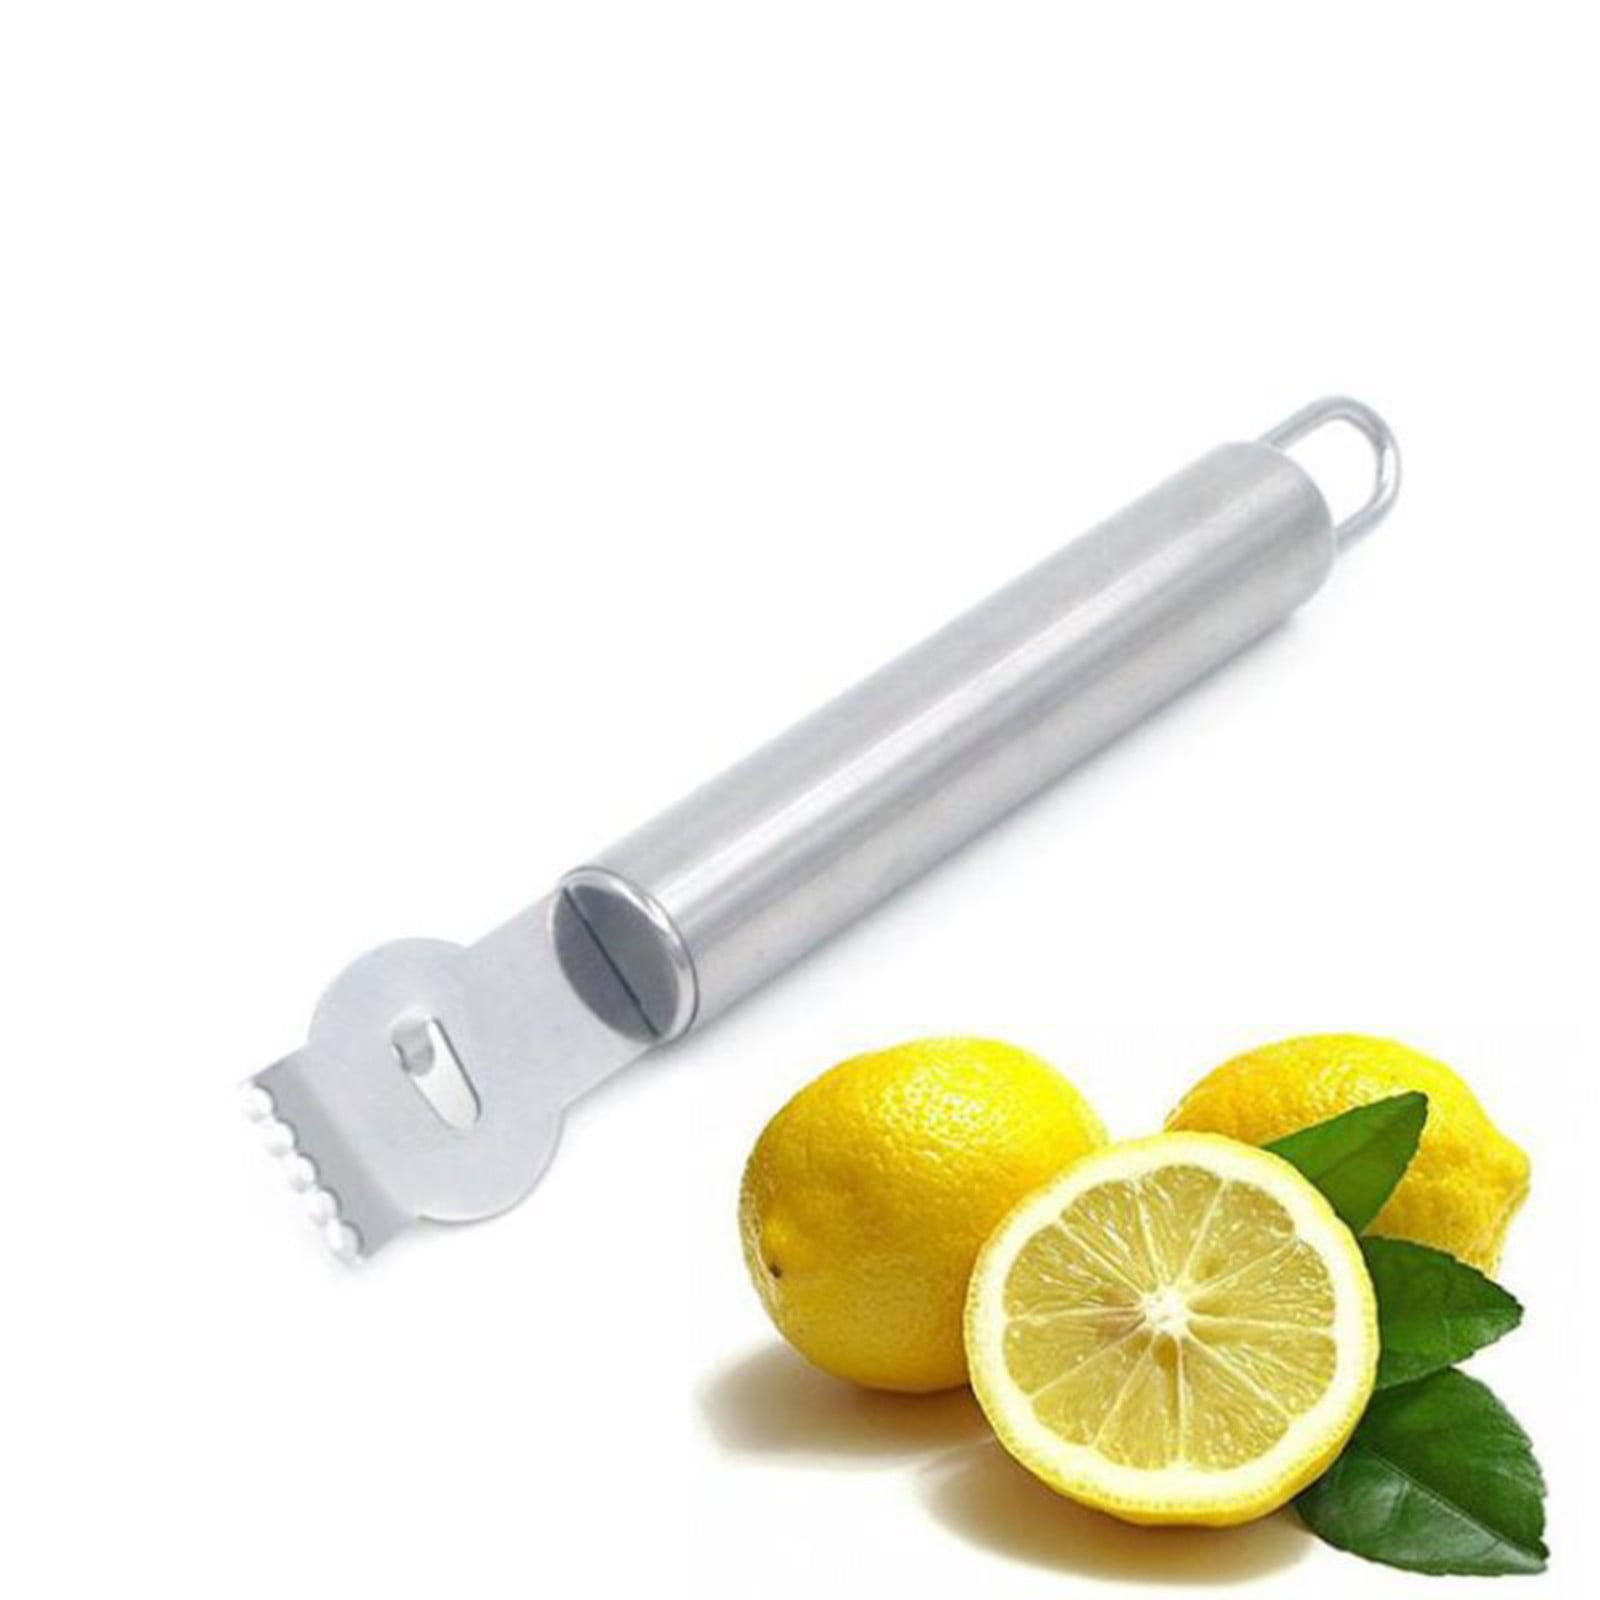 Details about   Innovative Lemon Peeler Orange Grater Stainless Steel Housewife Fruit Peeling BT 